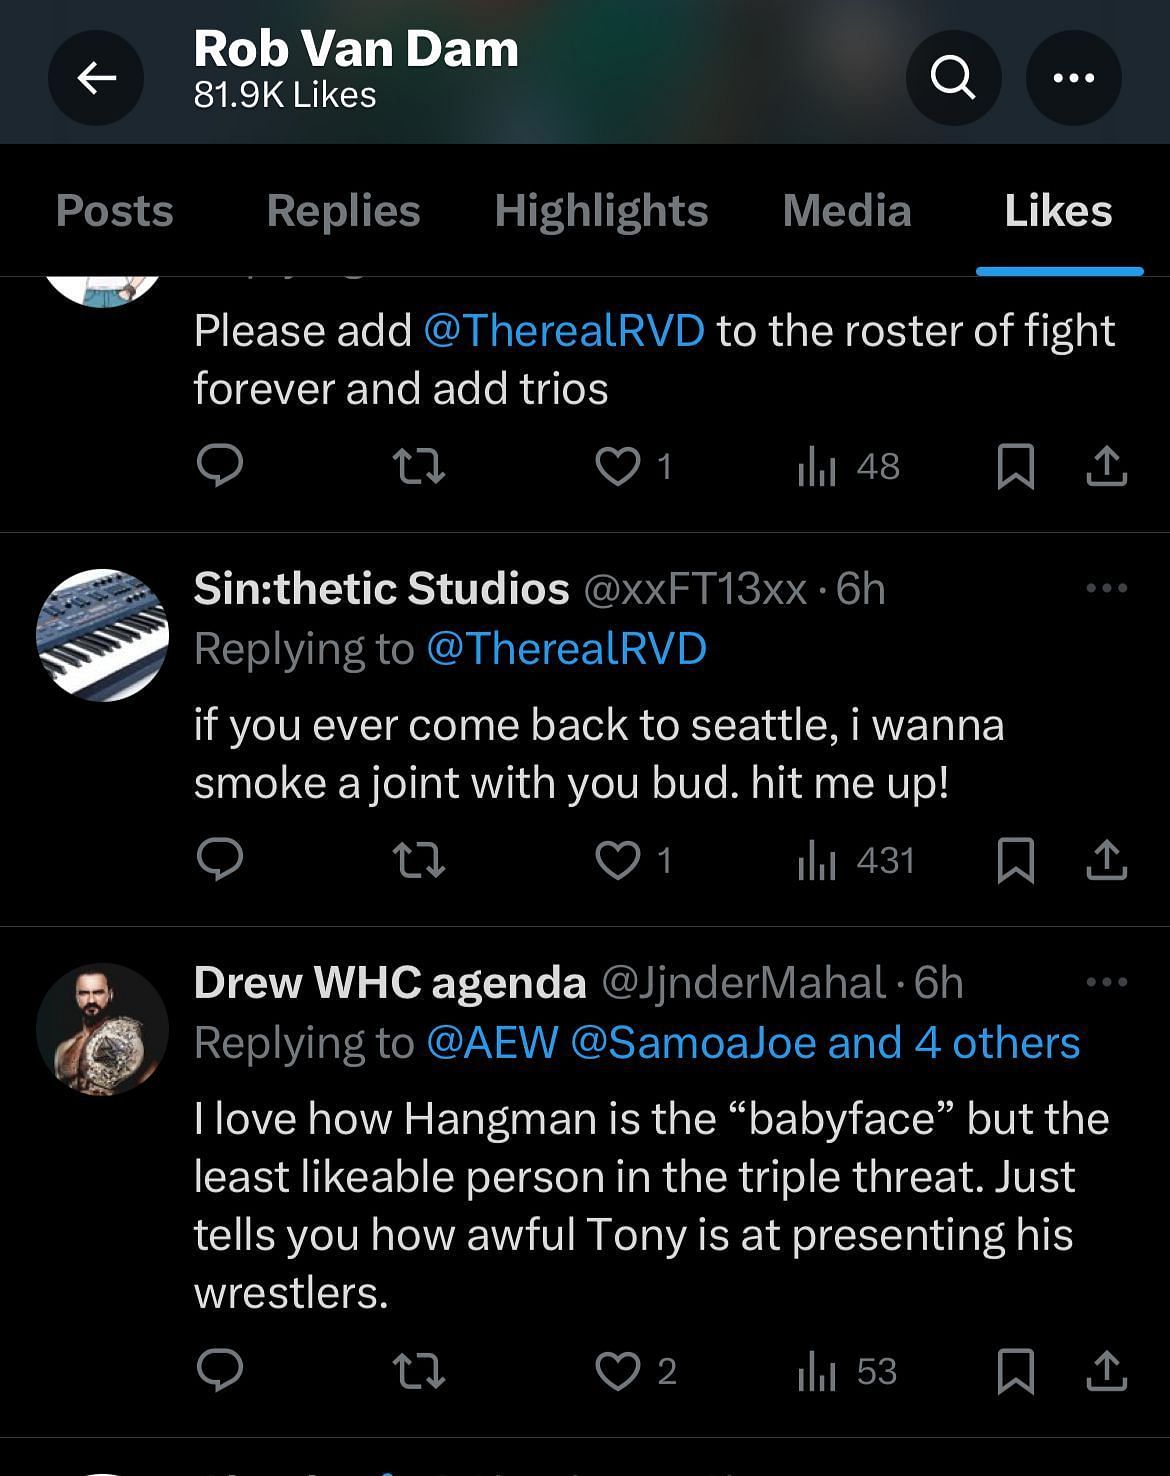 RVD liked a tweet criticizing Tony Khan